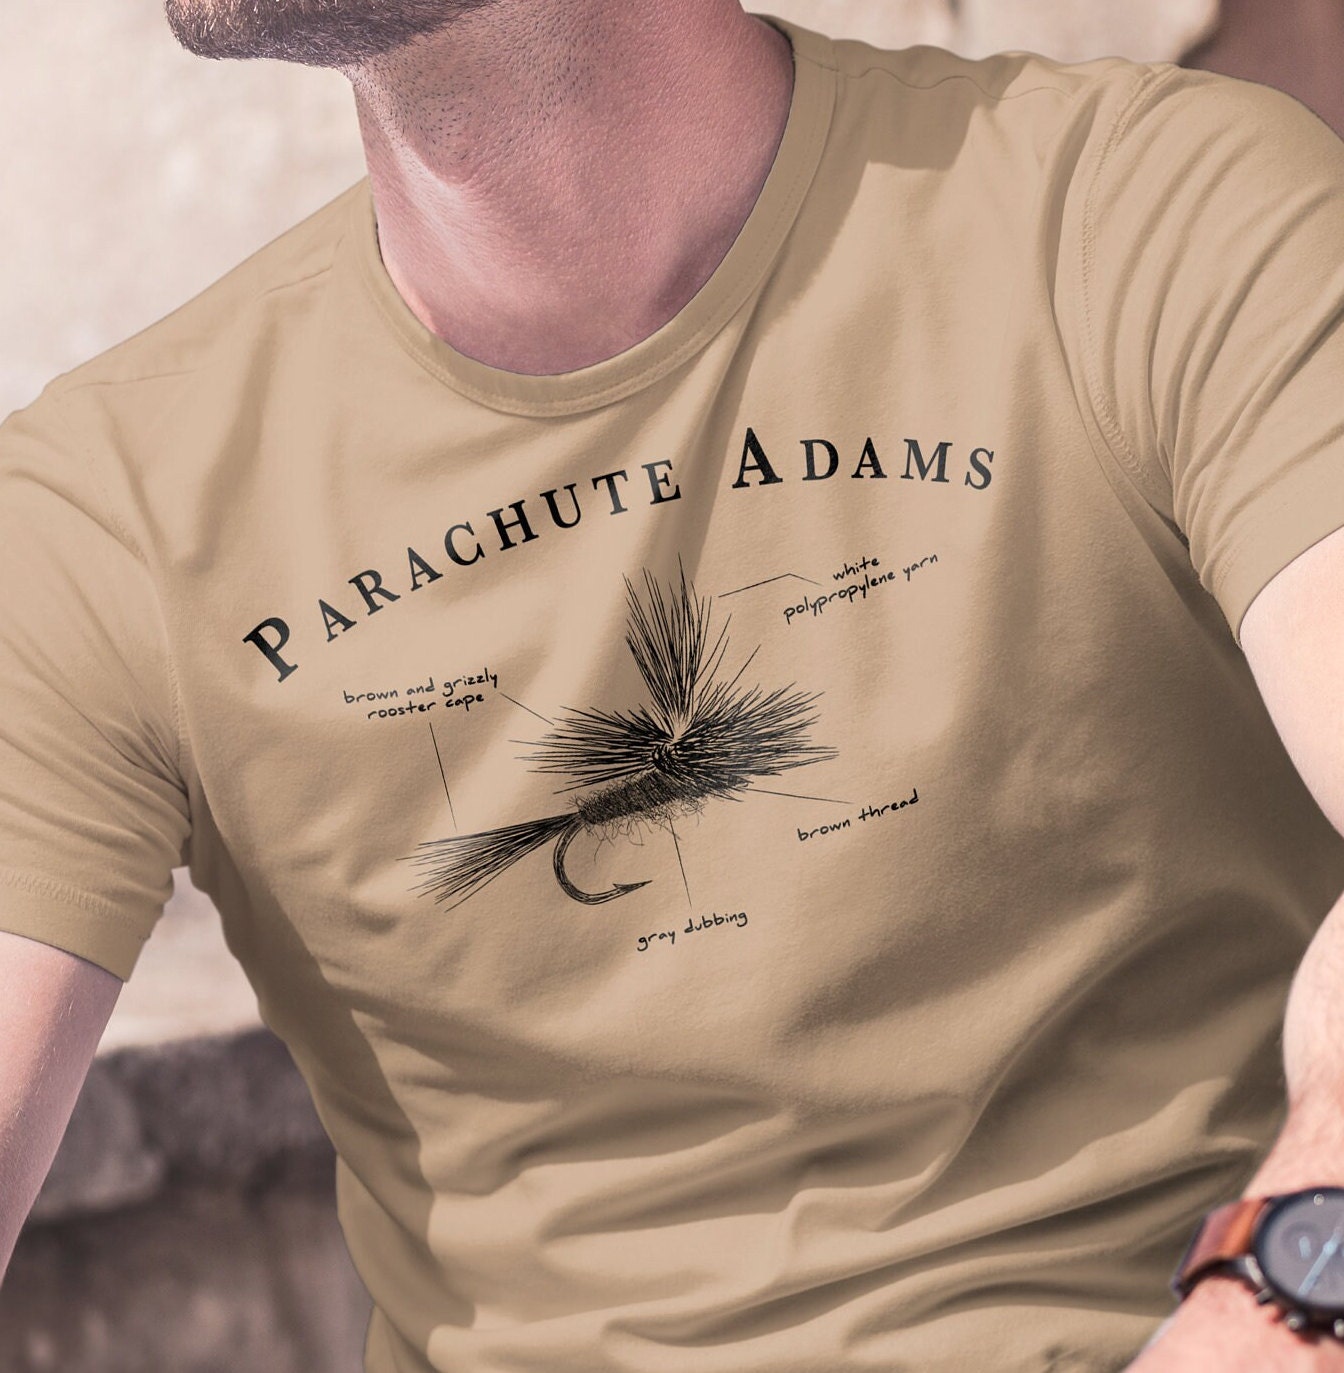 Parachute Adams Dry Fly unisex T-Shirt - Fly Fishing Gear - Fishing T Shirt - Fly Tying - Dry Flies - Trout Fishing - Rainbow - Brown